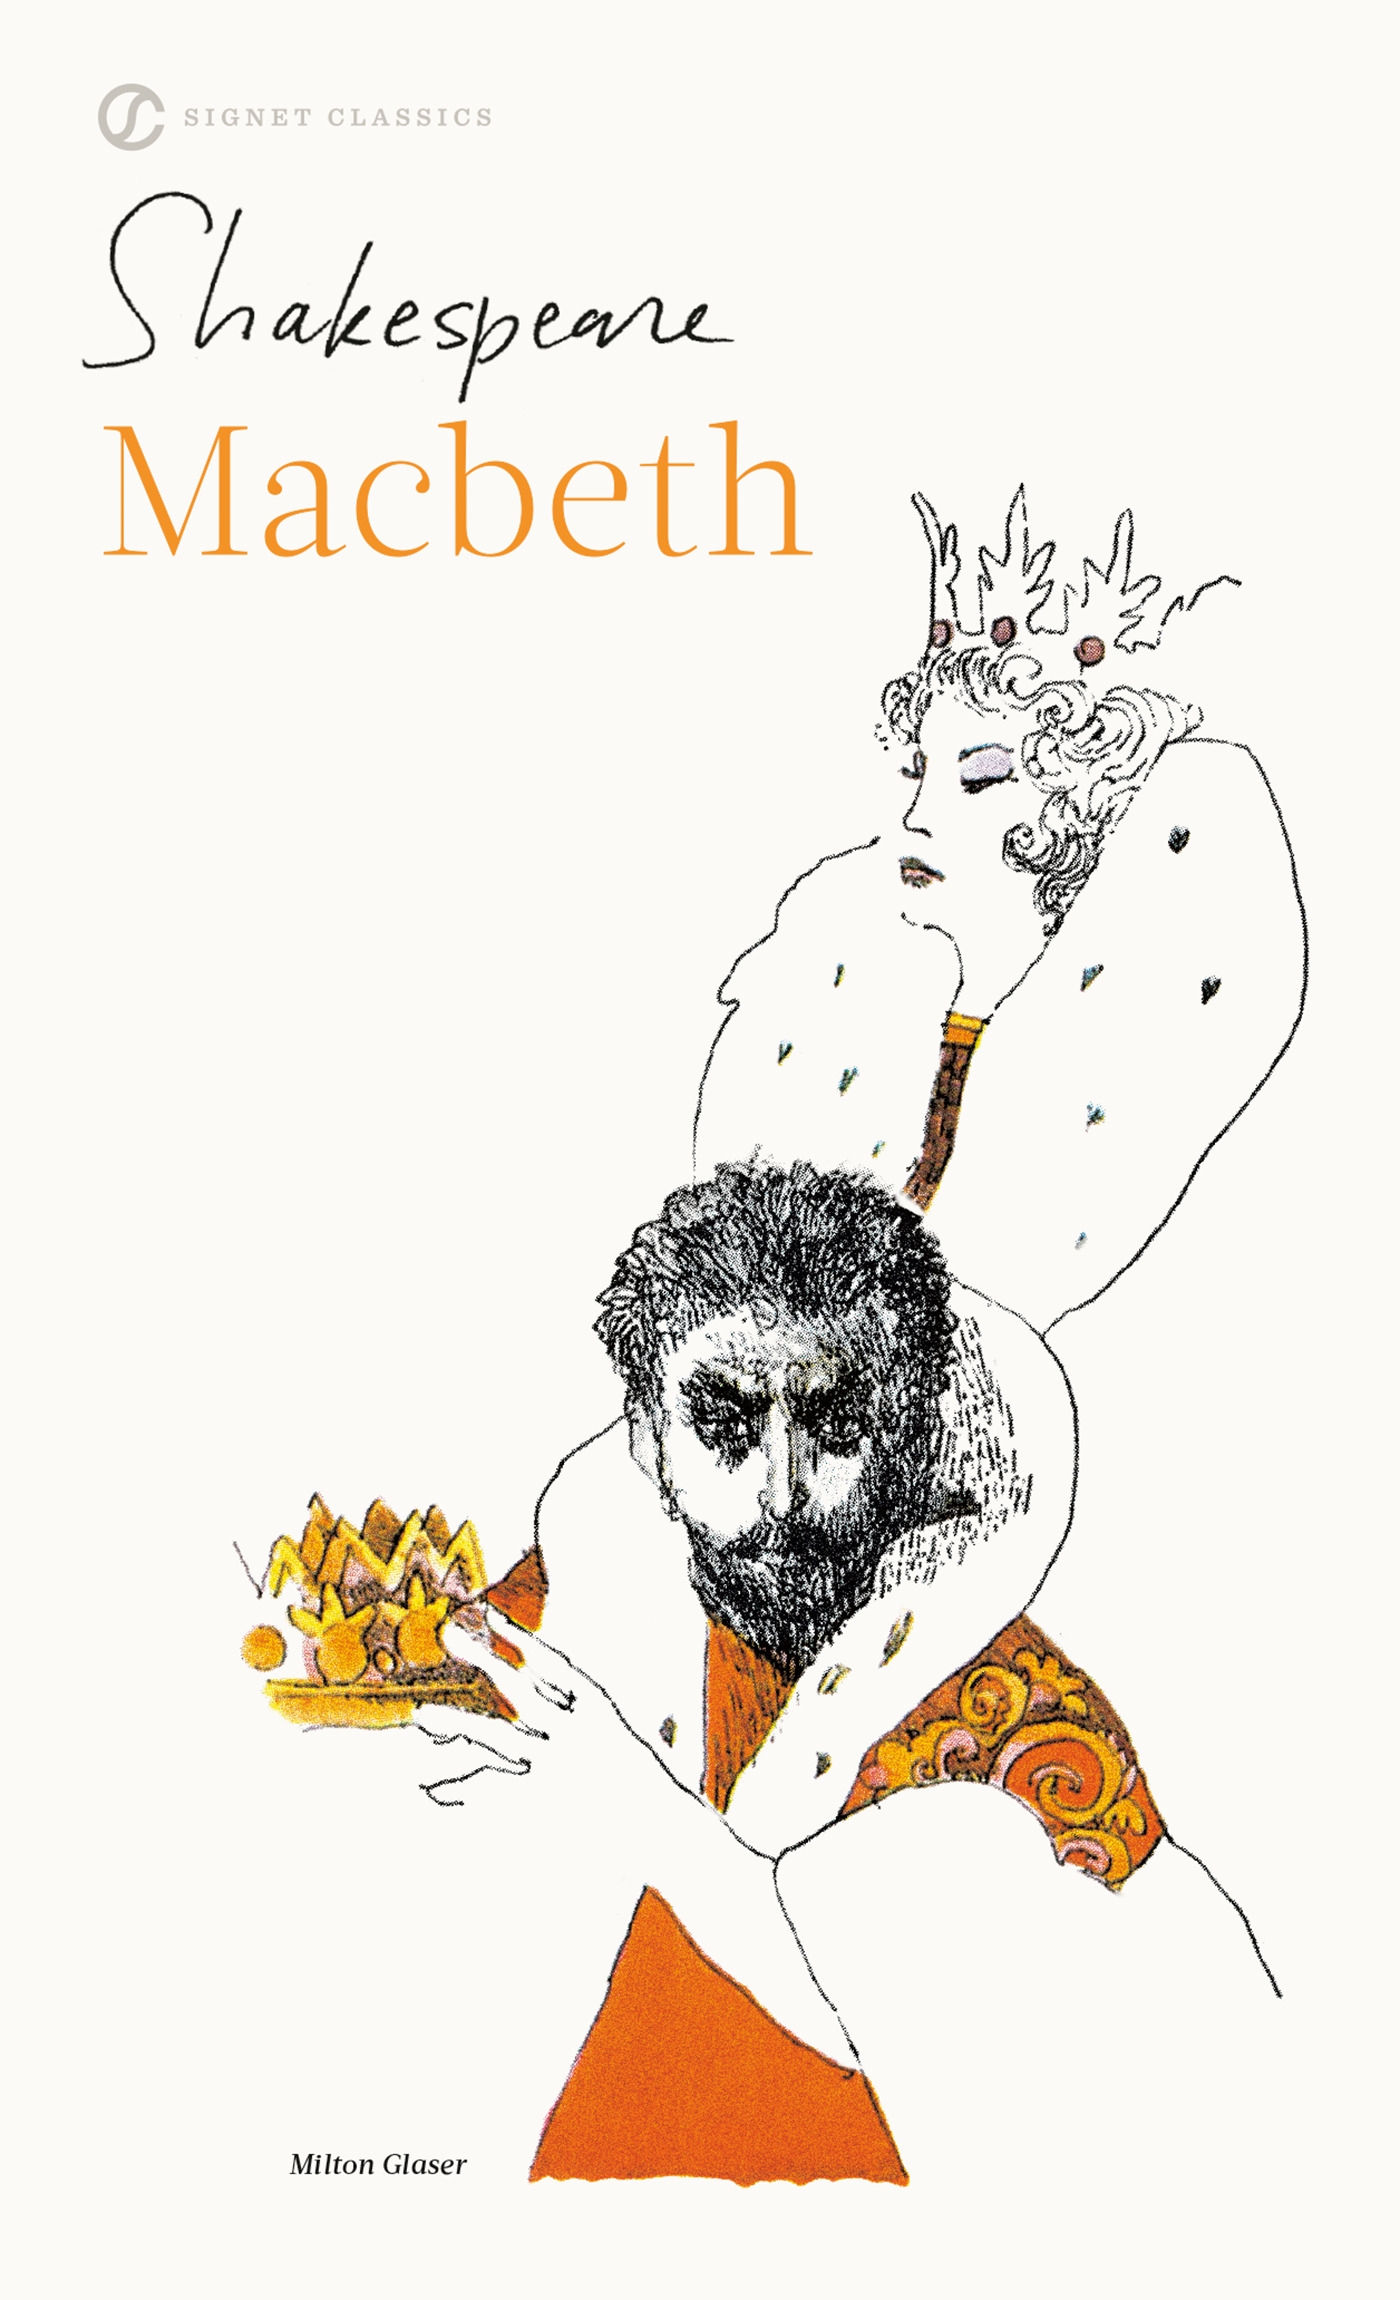 book review of macbeth